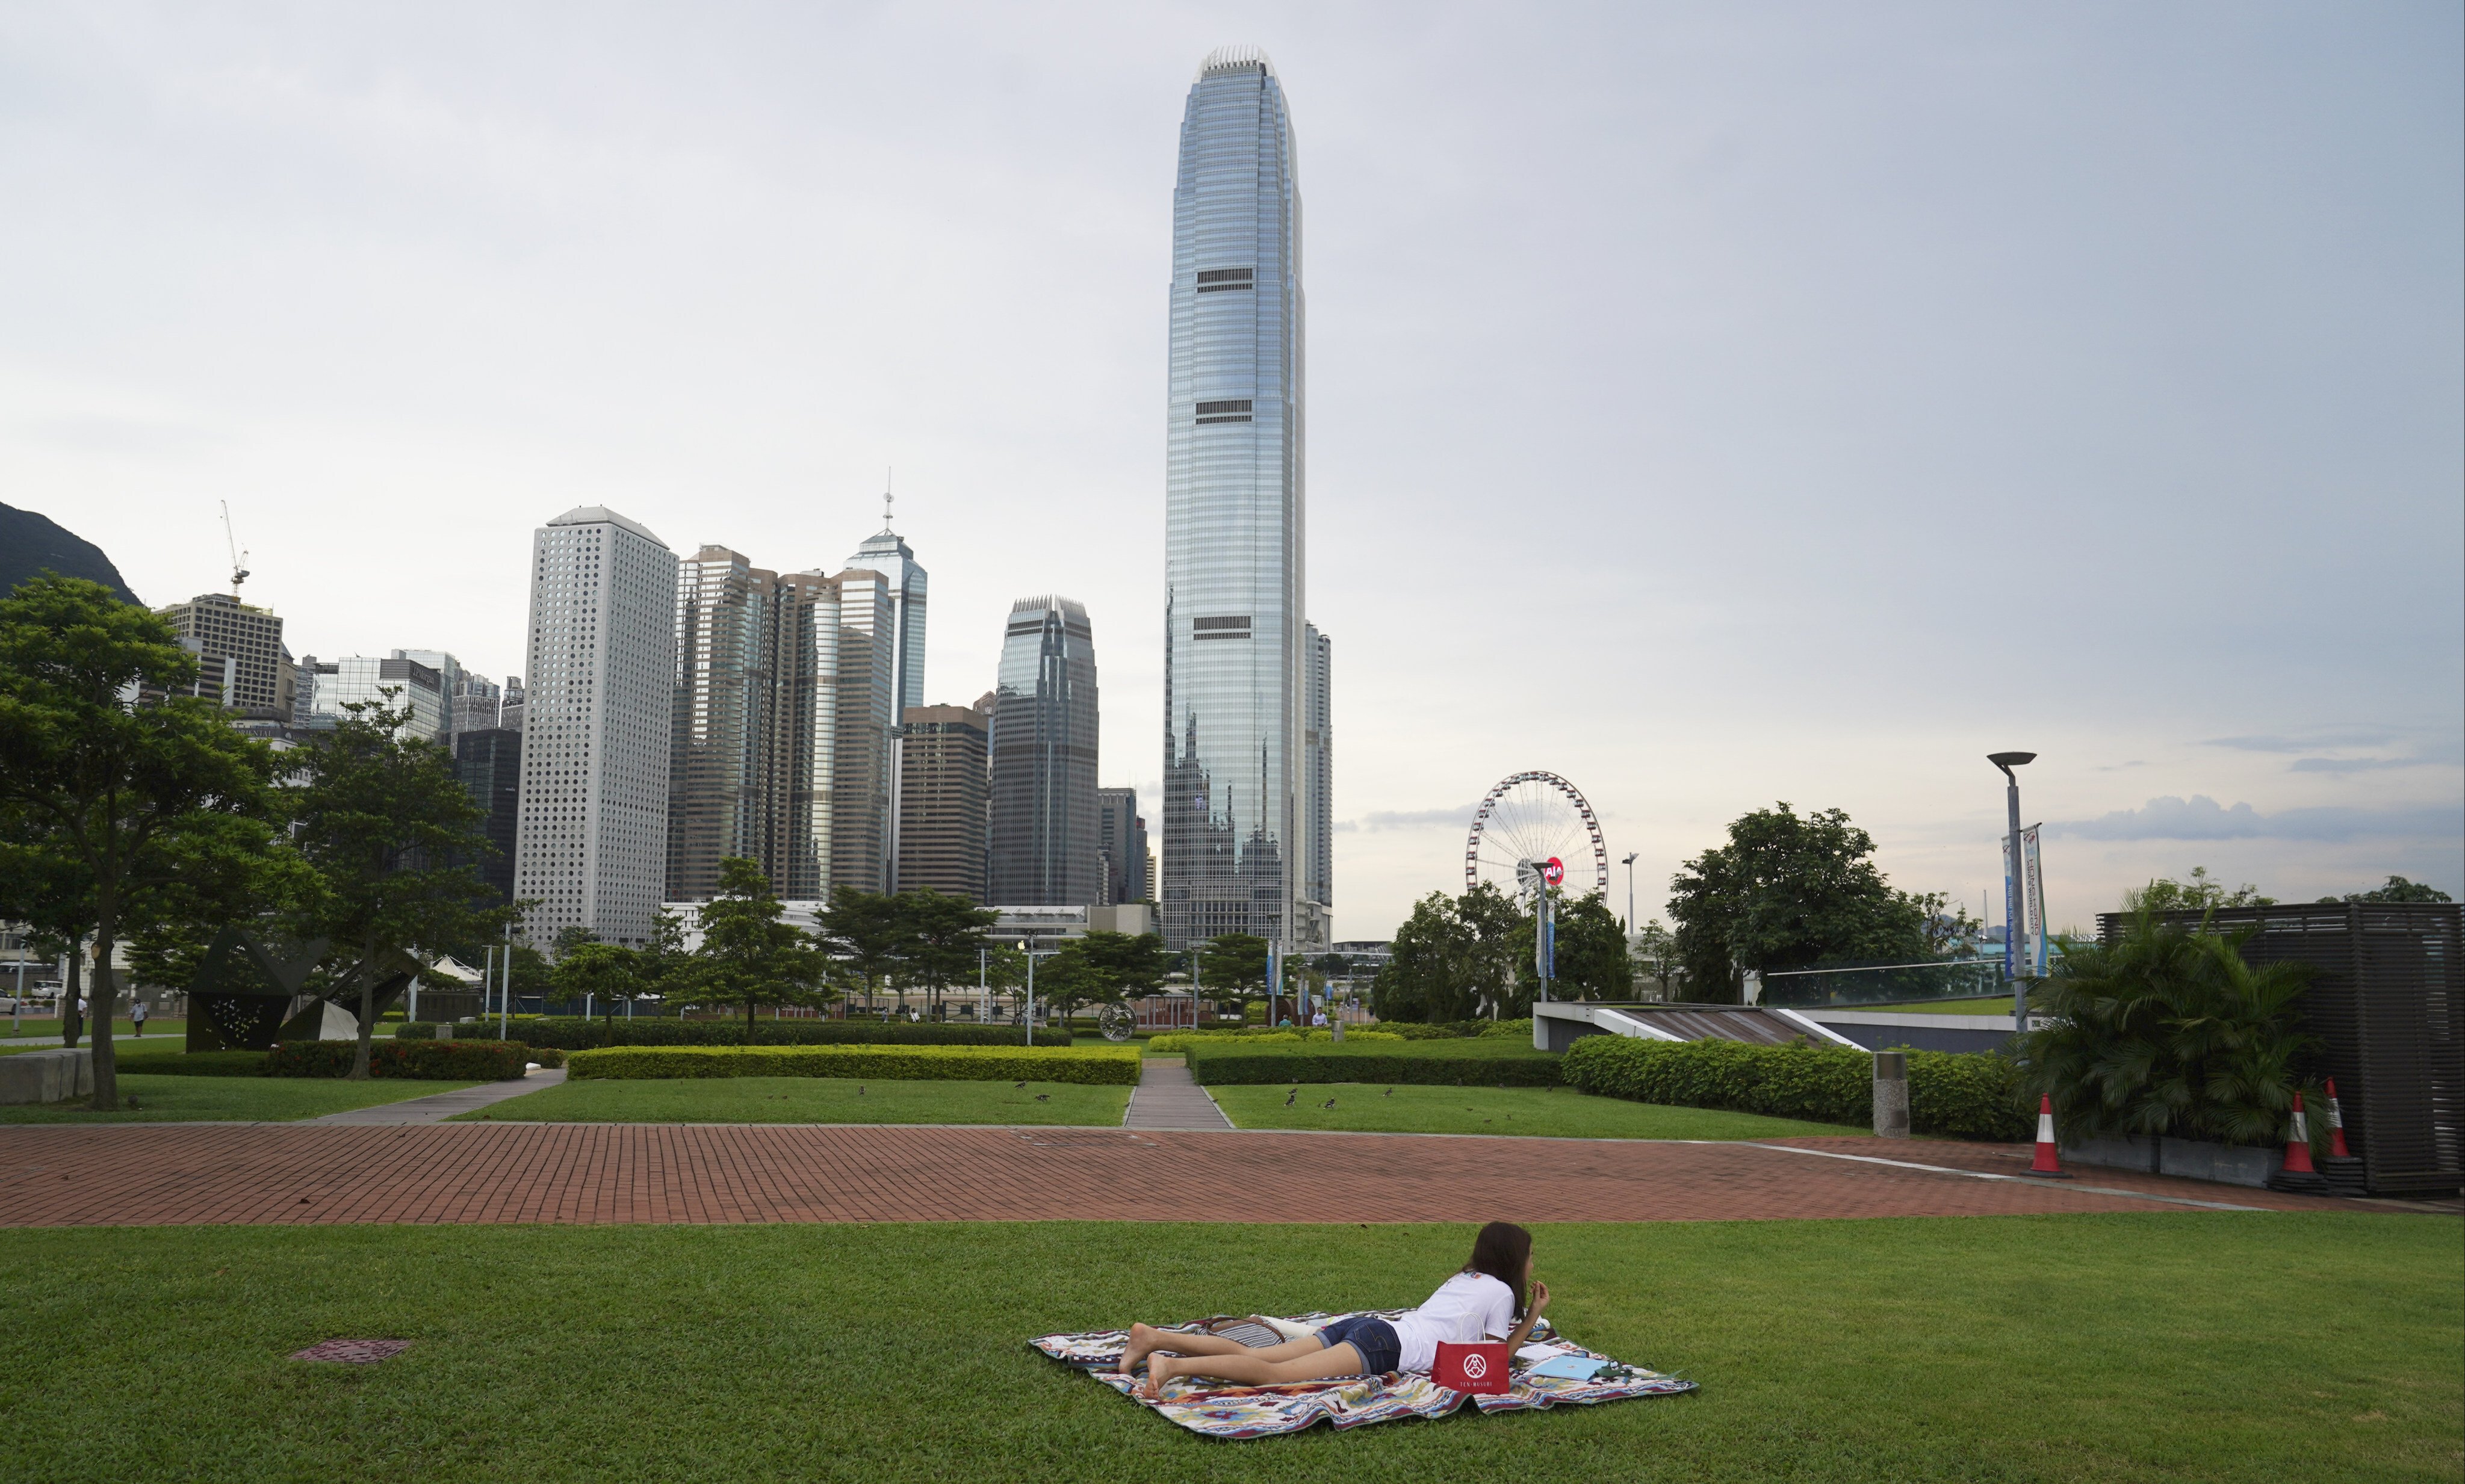 The Hong Kong government aims to make the city carbon neutral by 2050. Photo: Sam Tsang